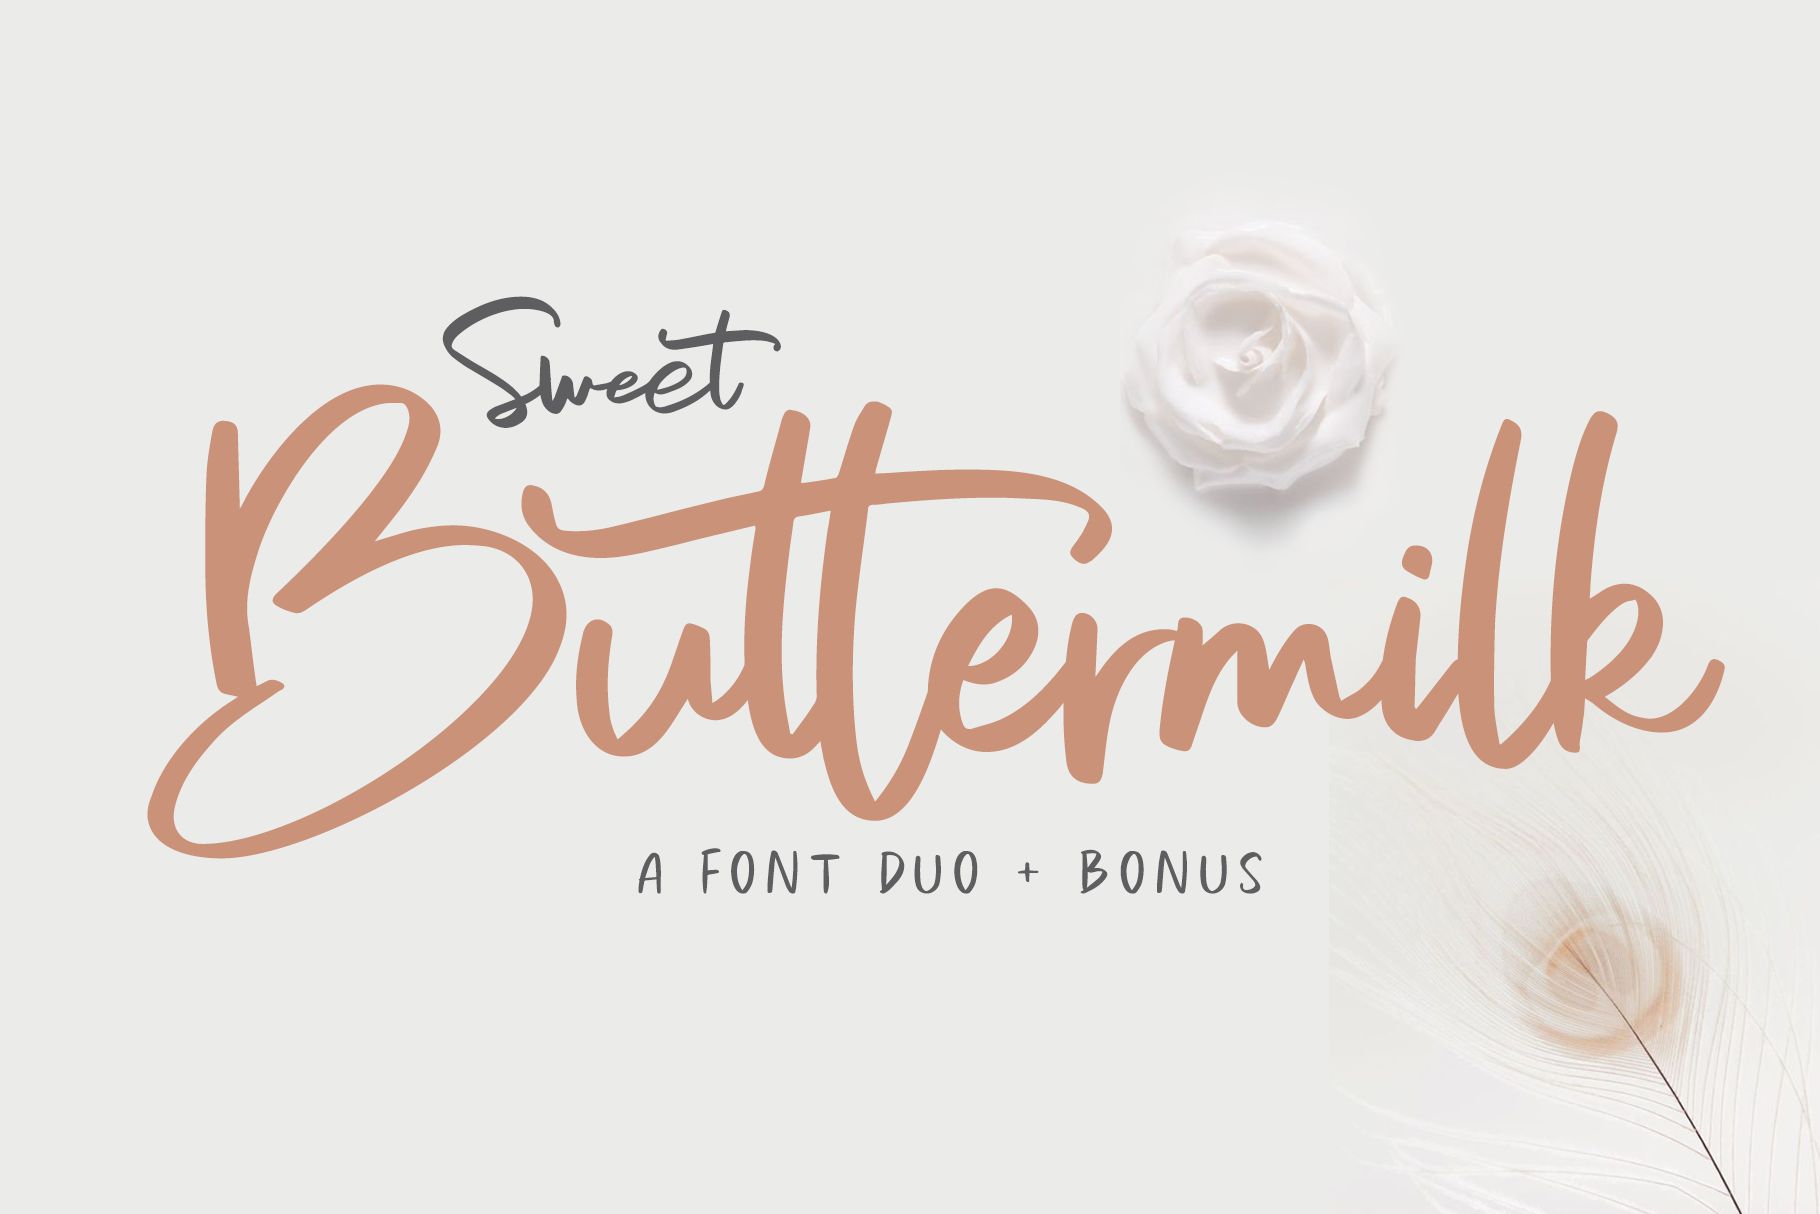 Sweet Buttermilk Free Sans